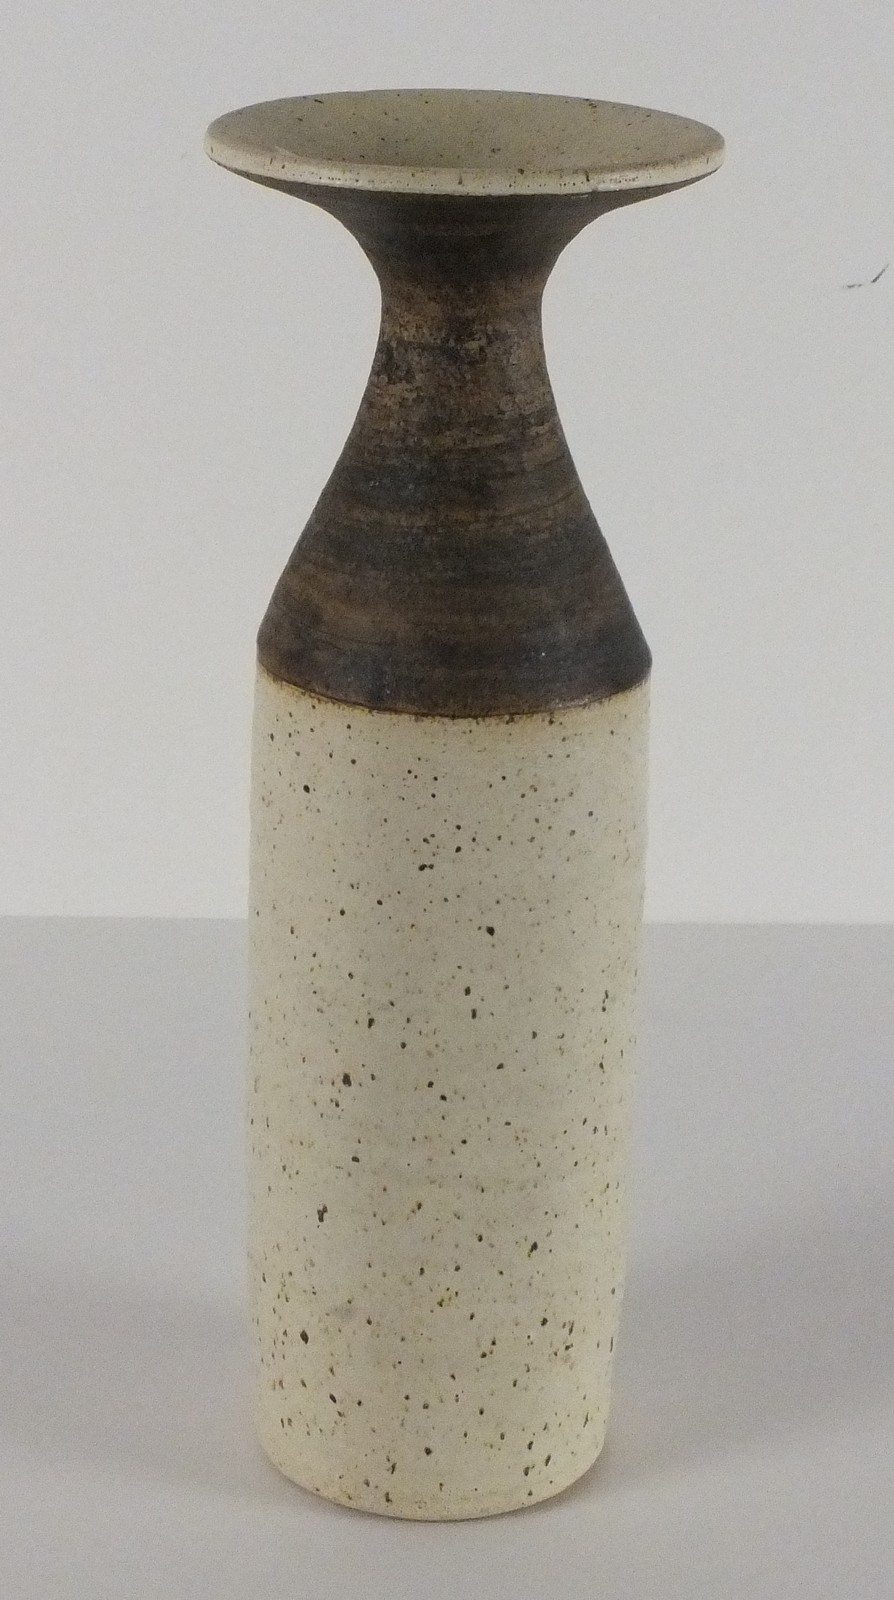 Dennis LANE, A cylindrical stoneware vase with trumpet form neck, Circa 1957-1969), Impressed